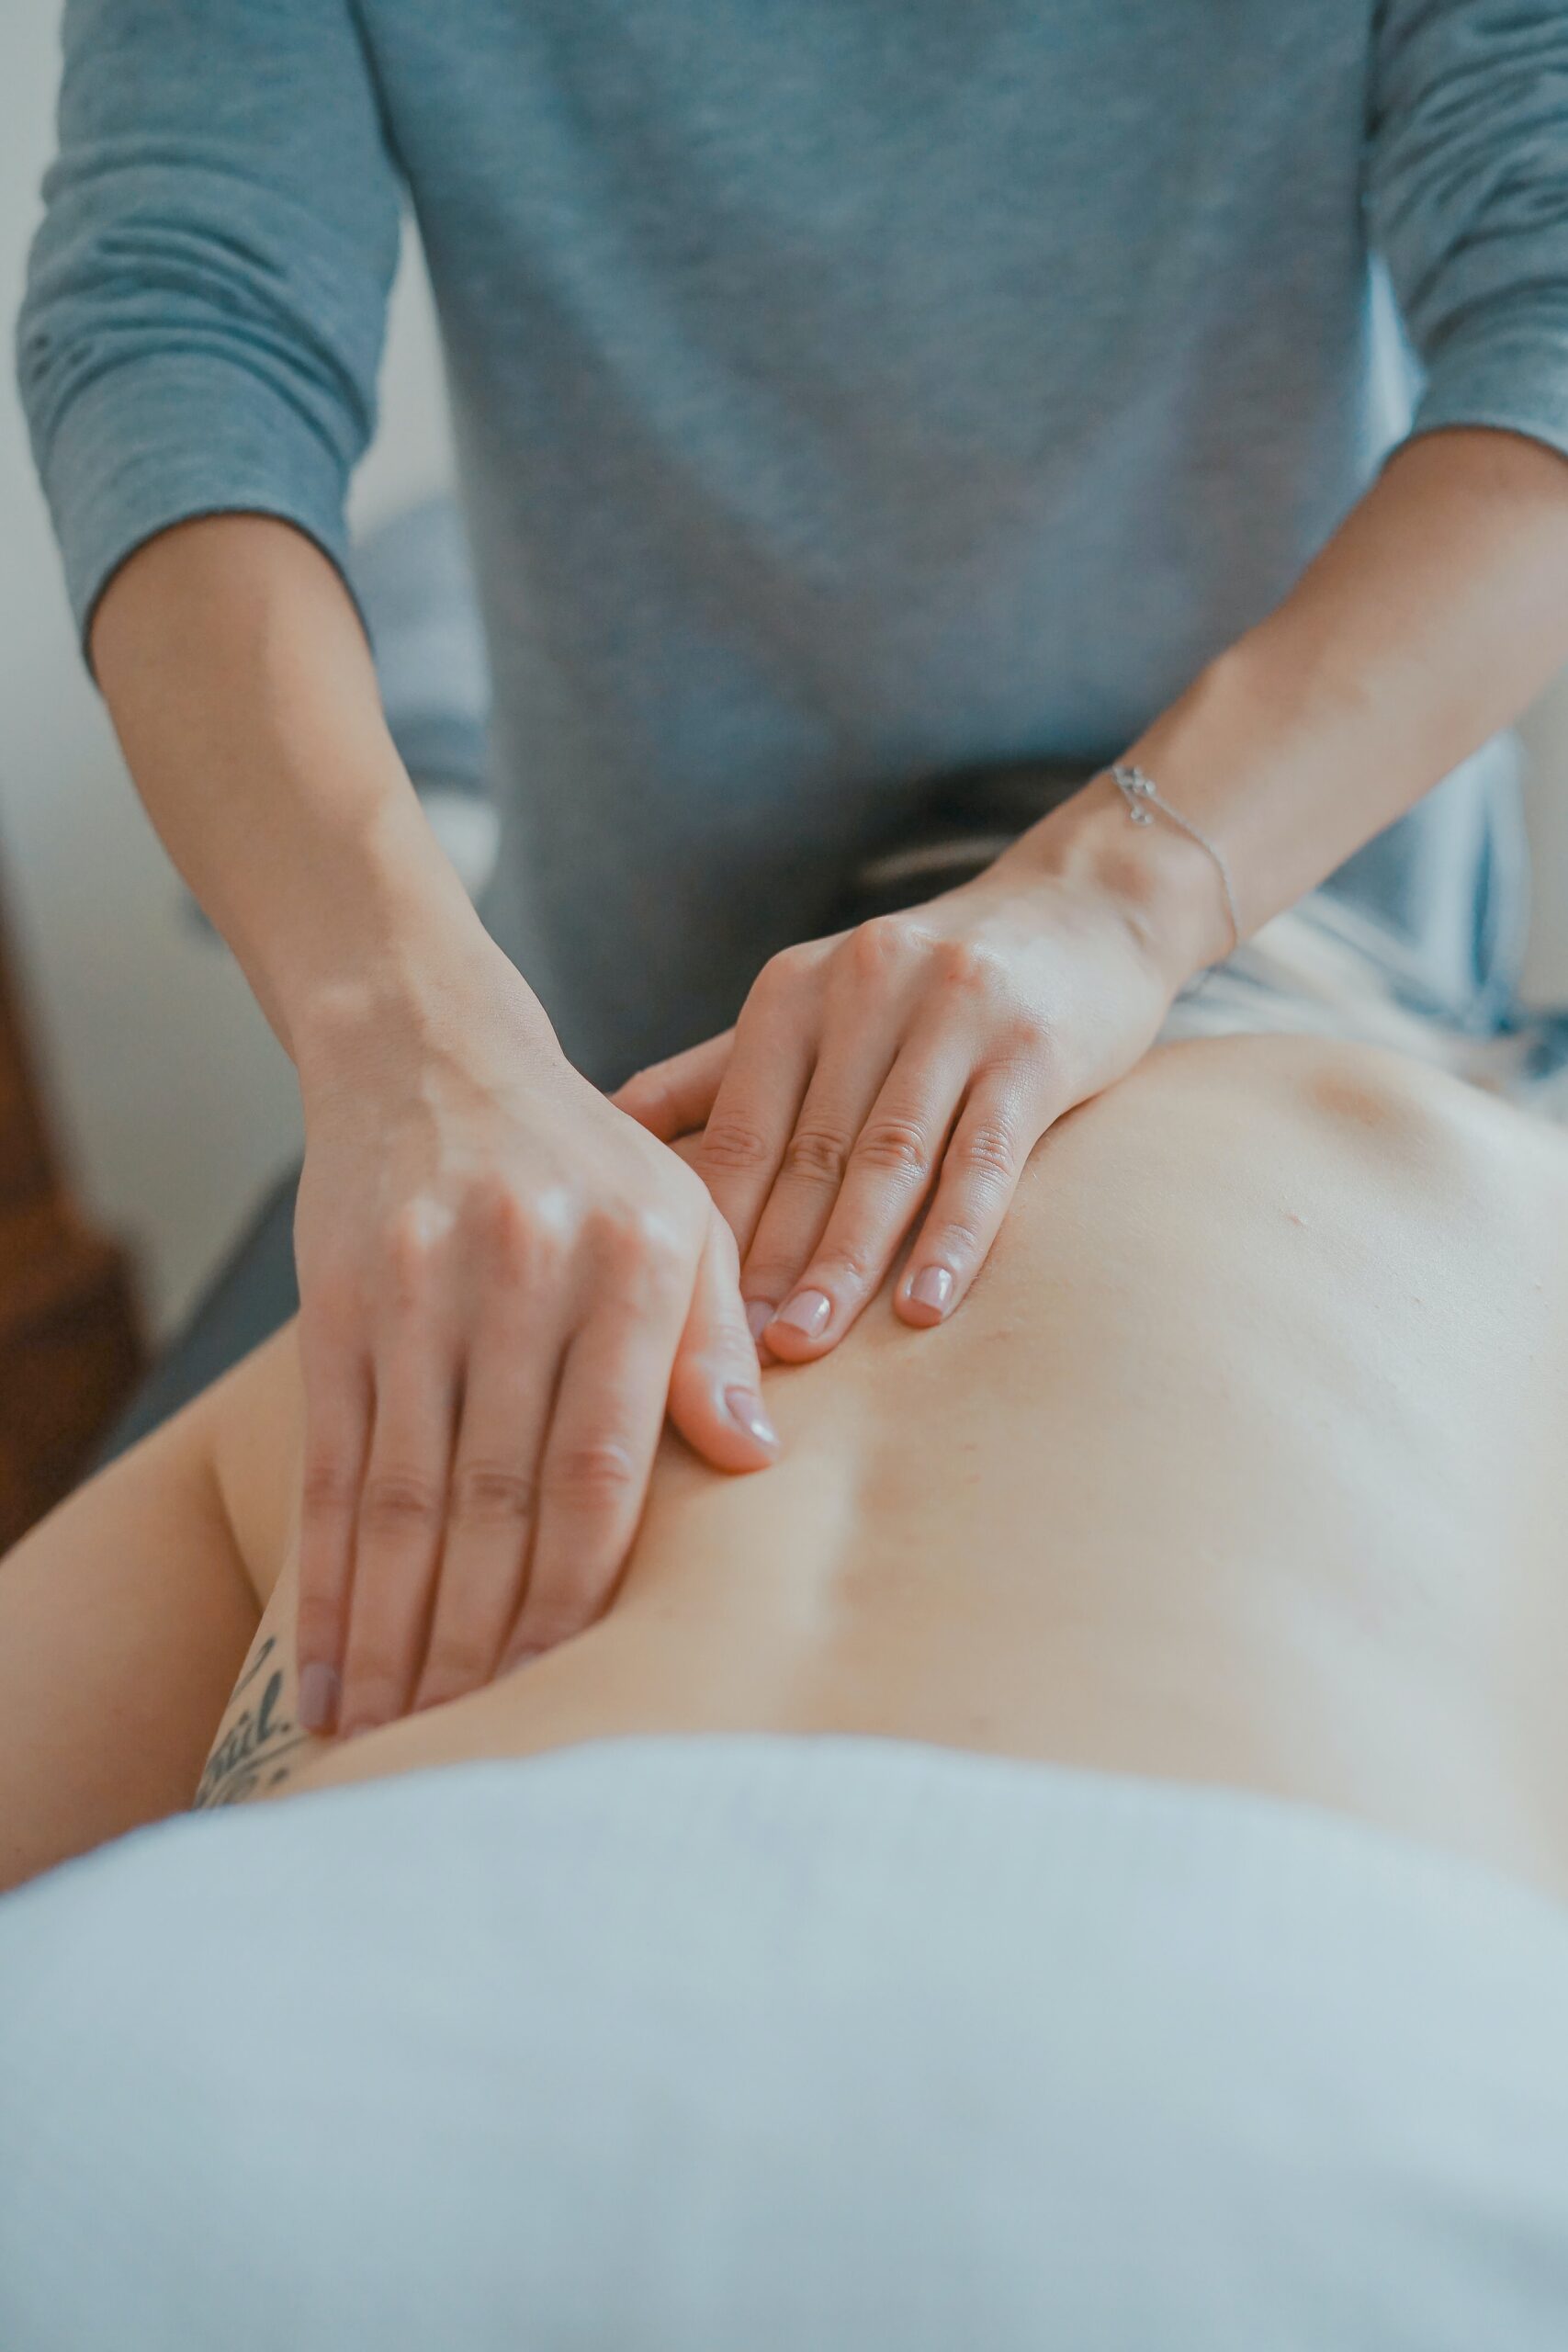 Chiropractor back massage